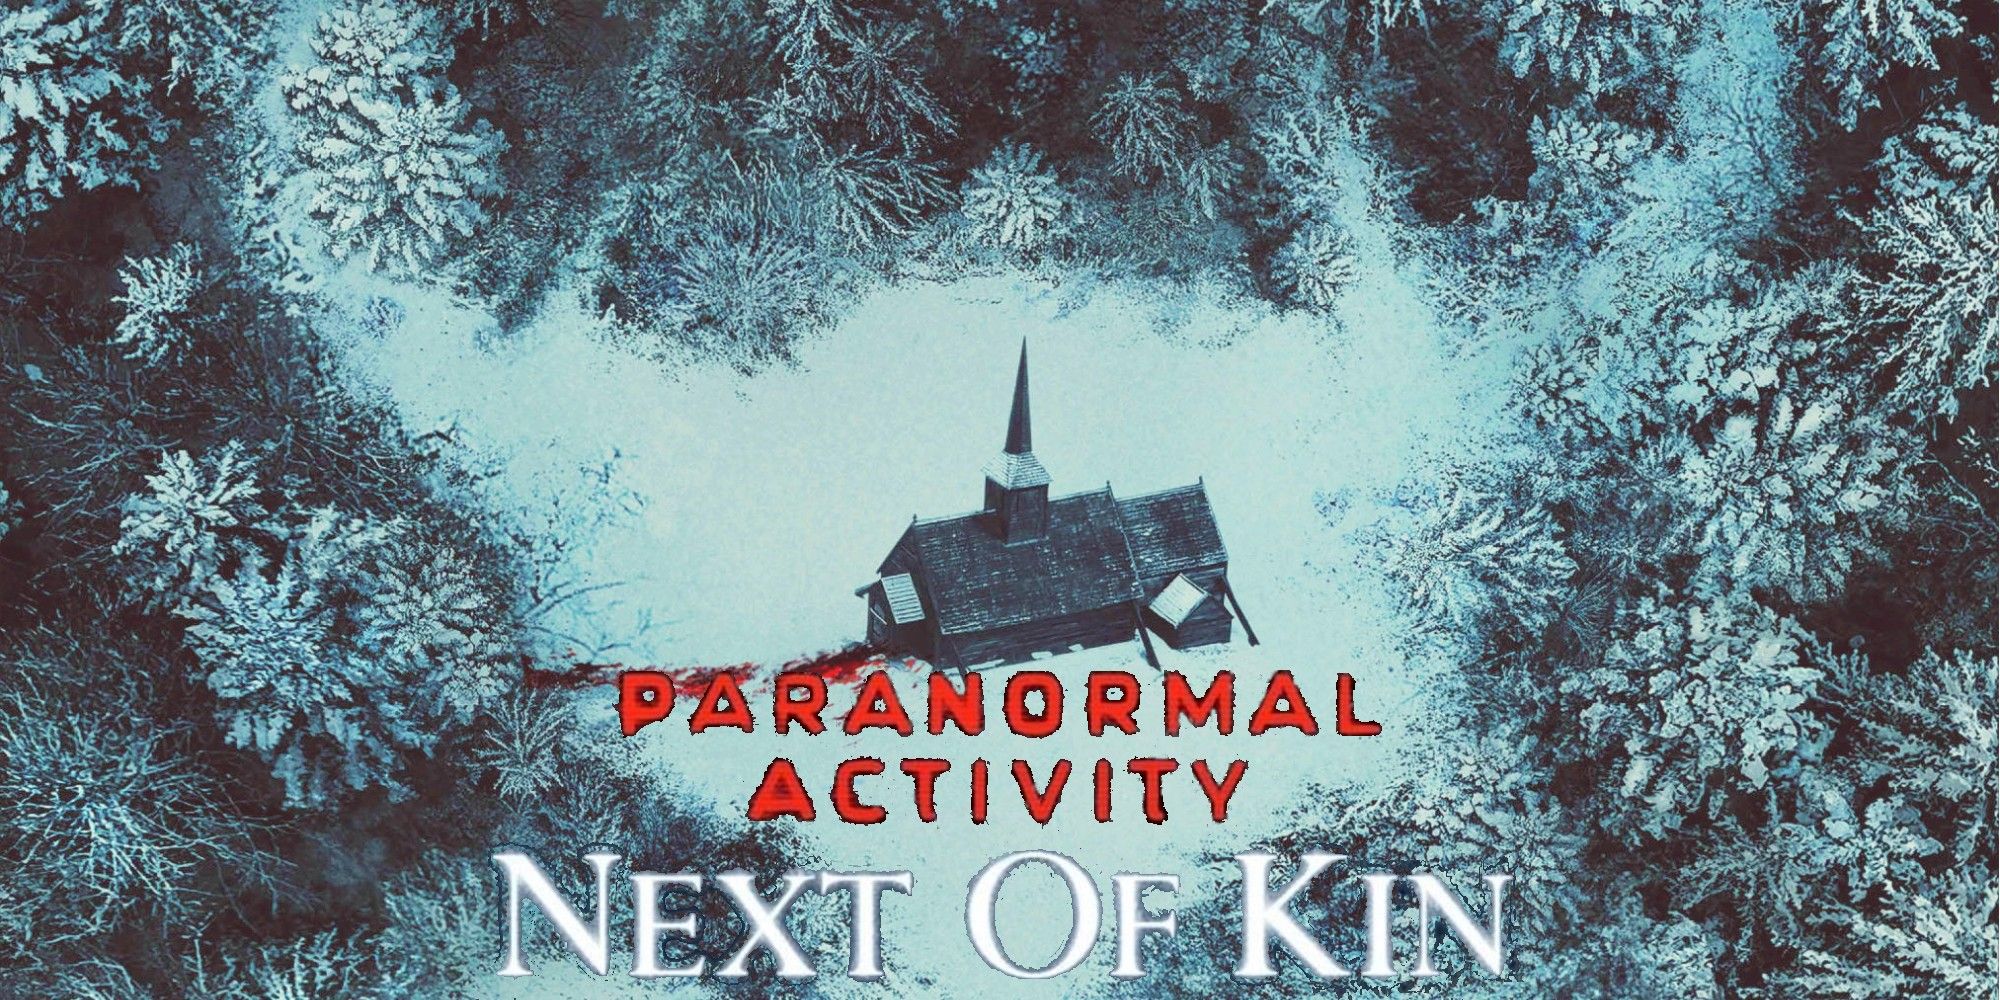 Paranormal Activity Next of Kin poster